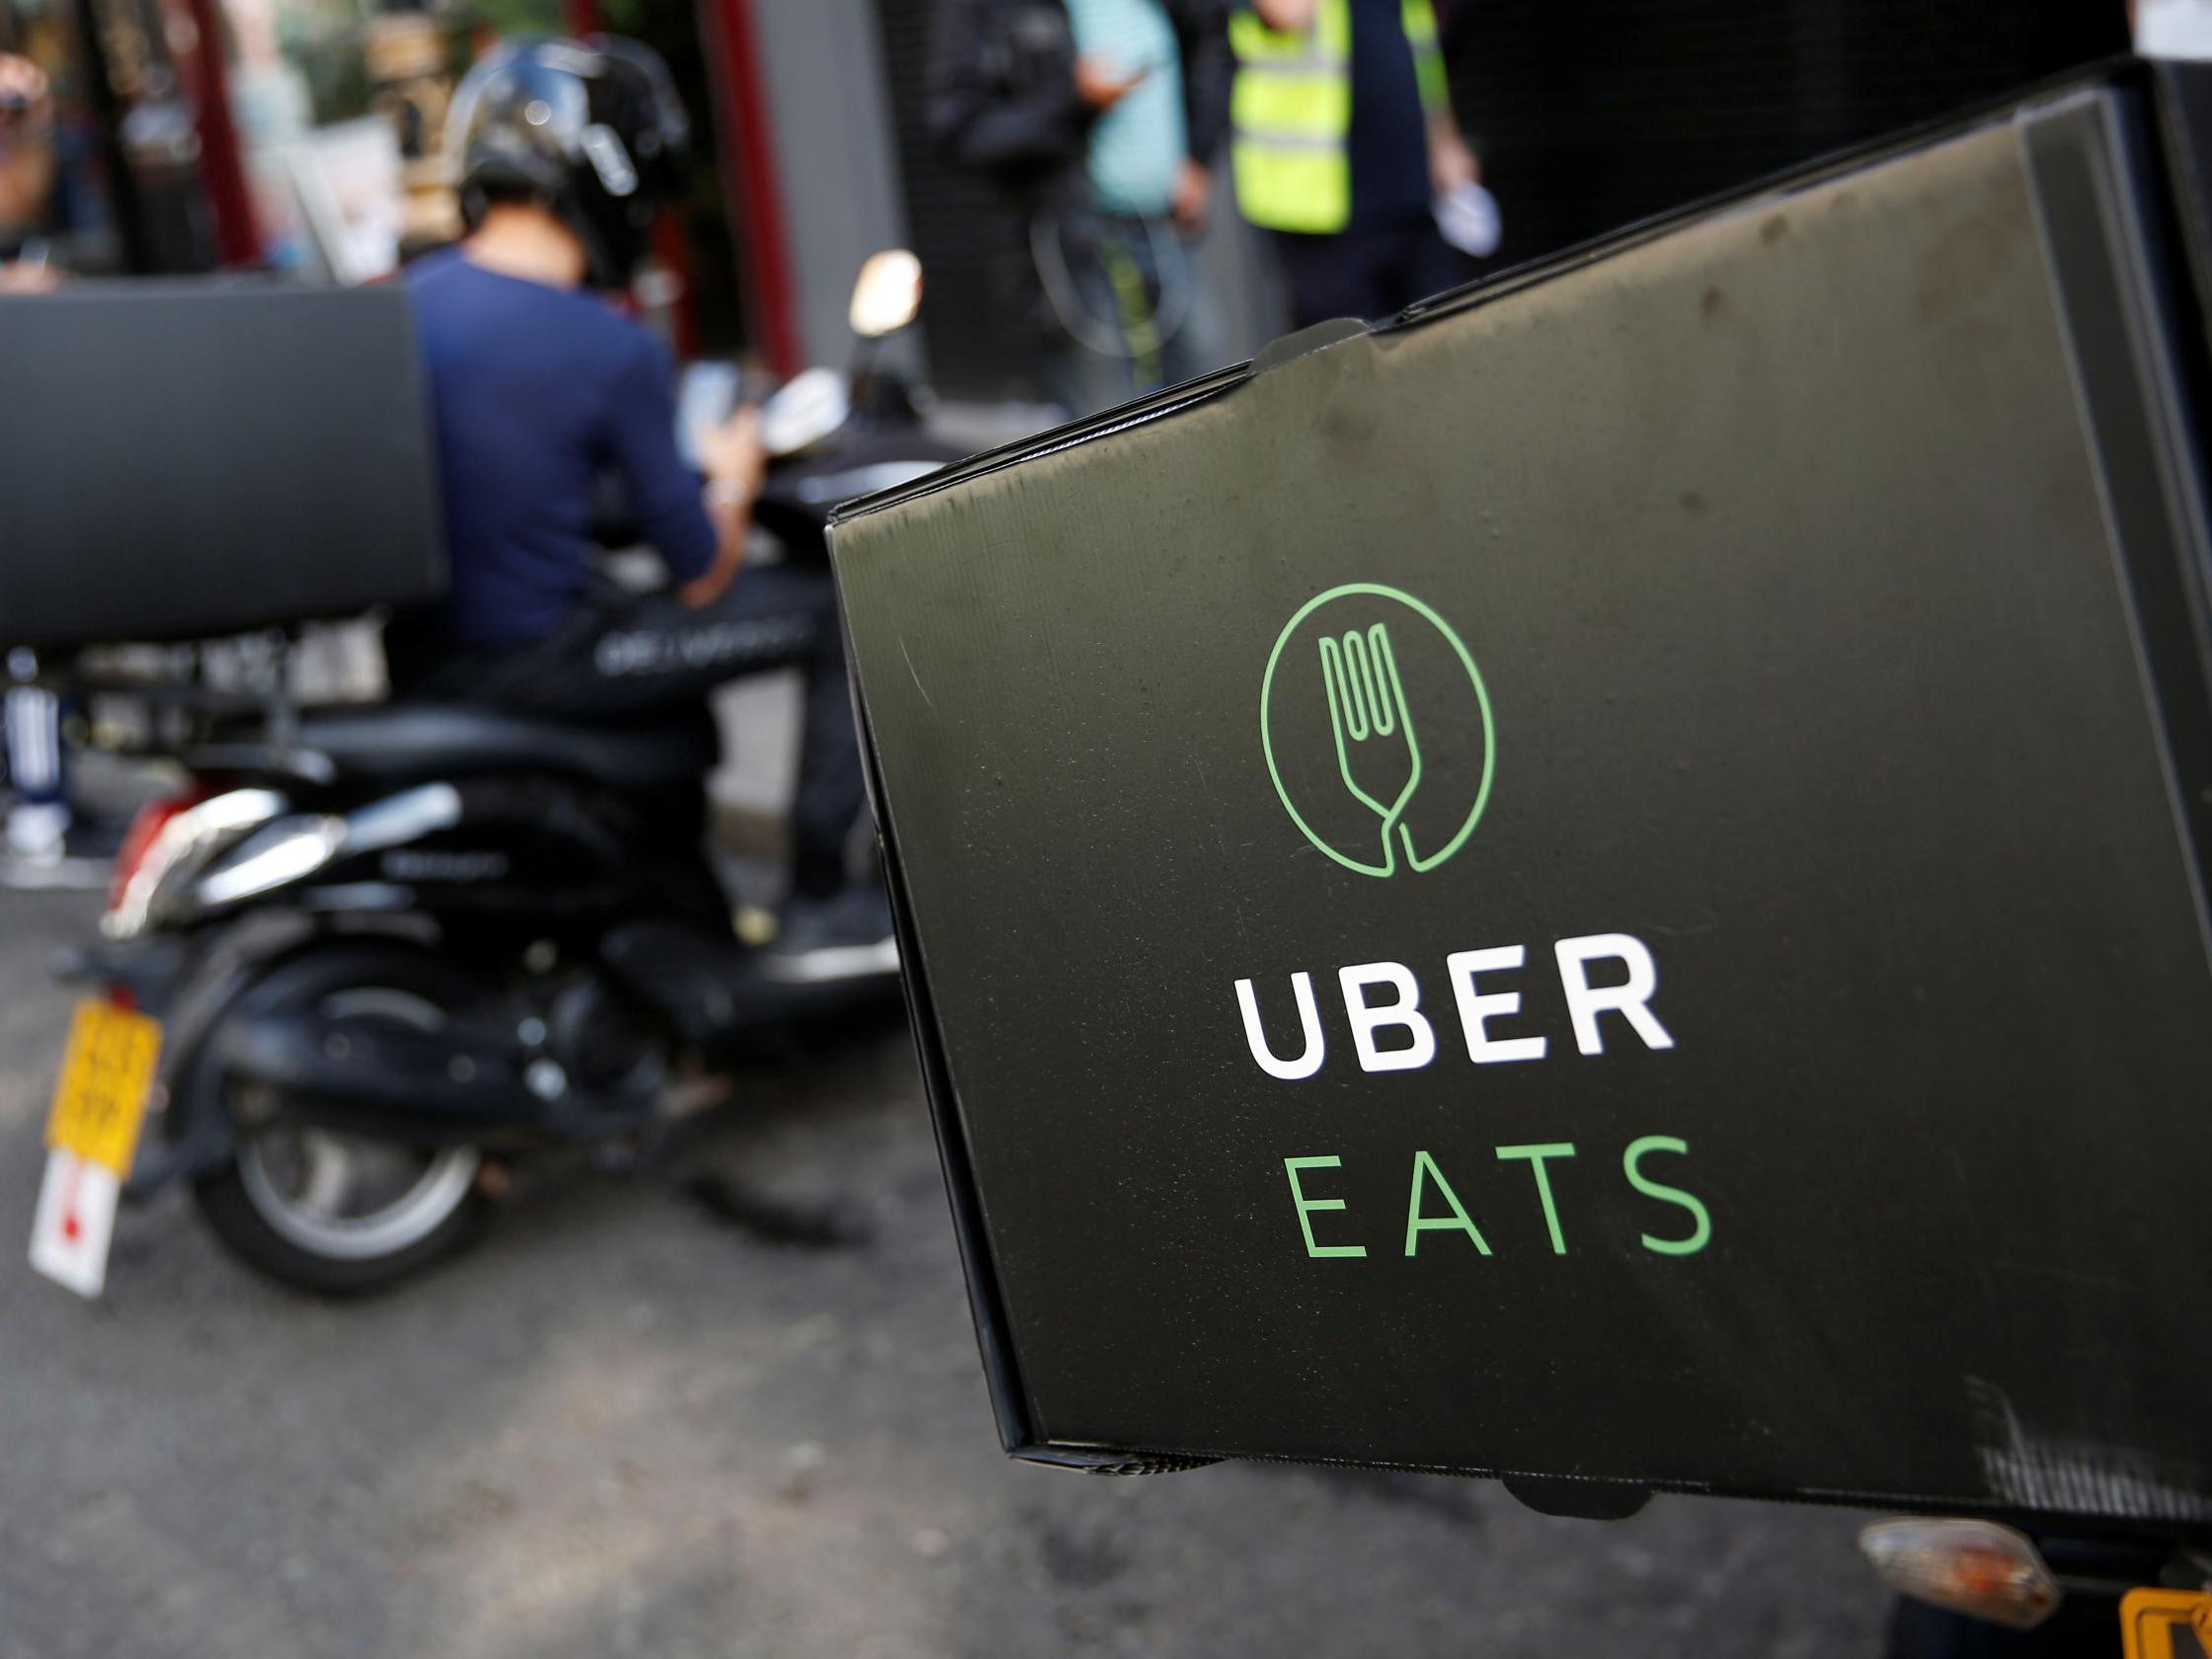 Uber Eats começa a funcionar em Caruaru nesta quinta (29)